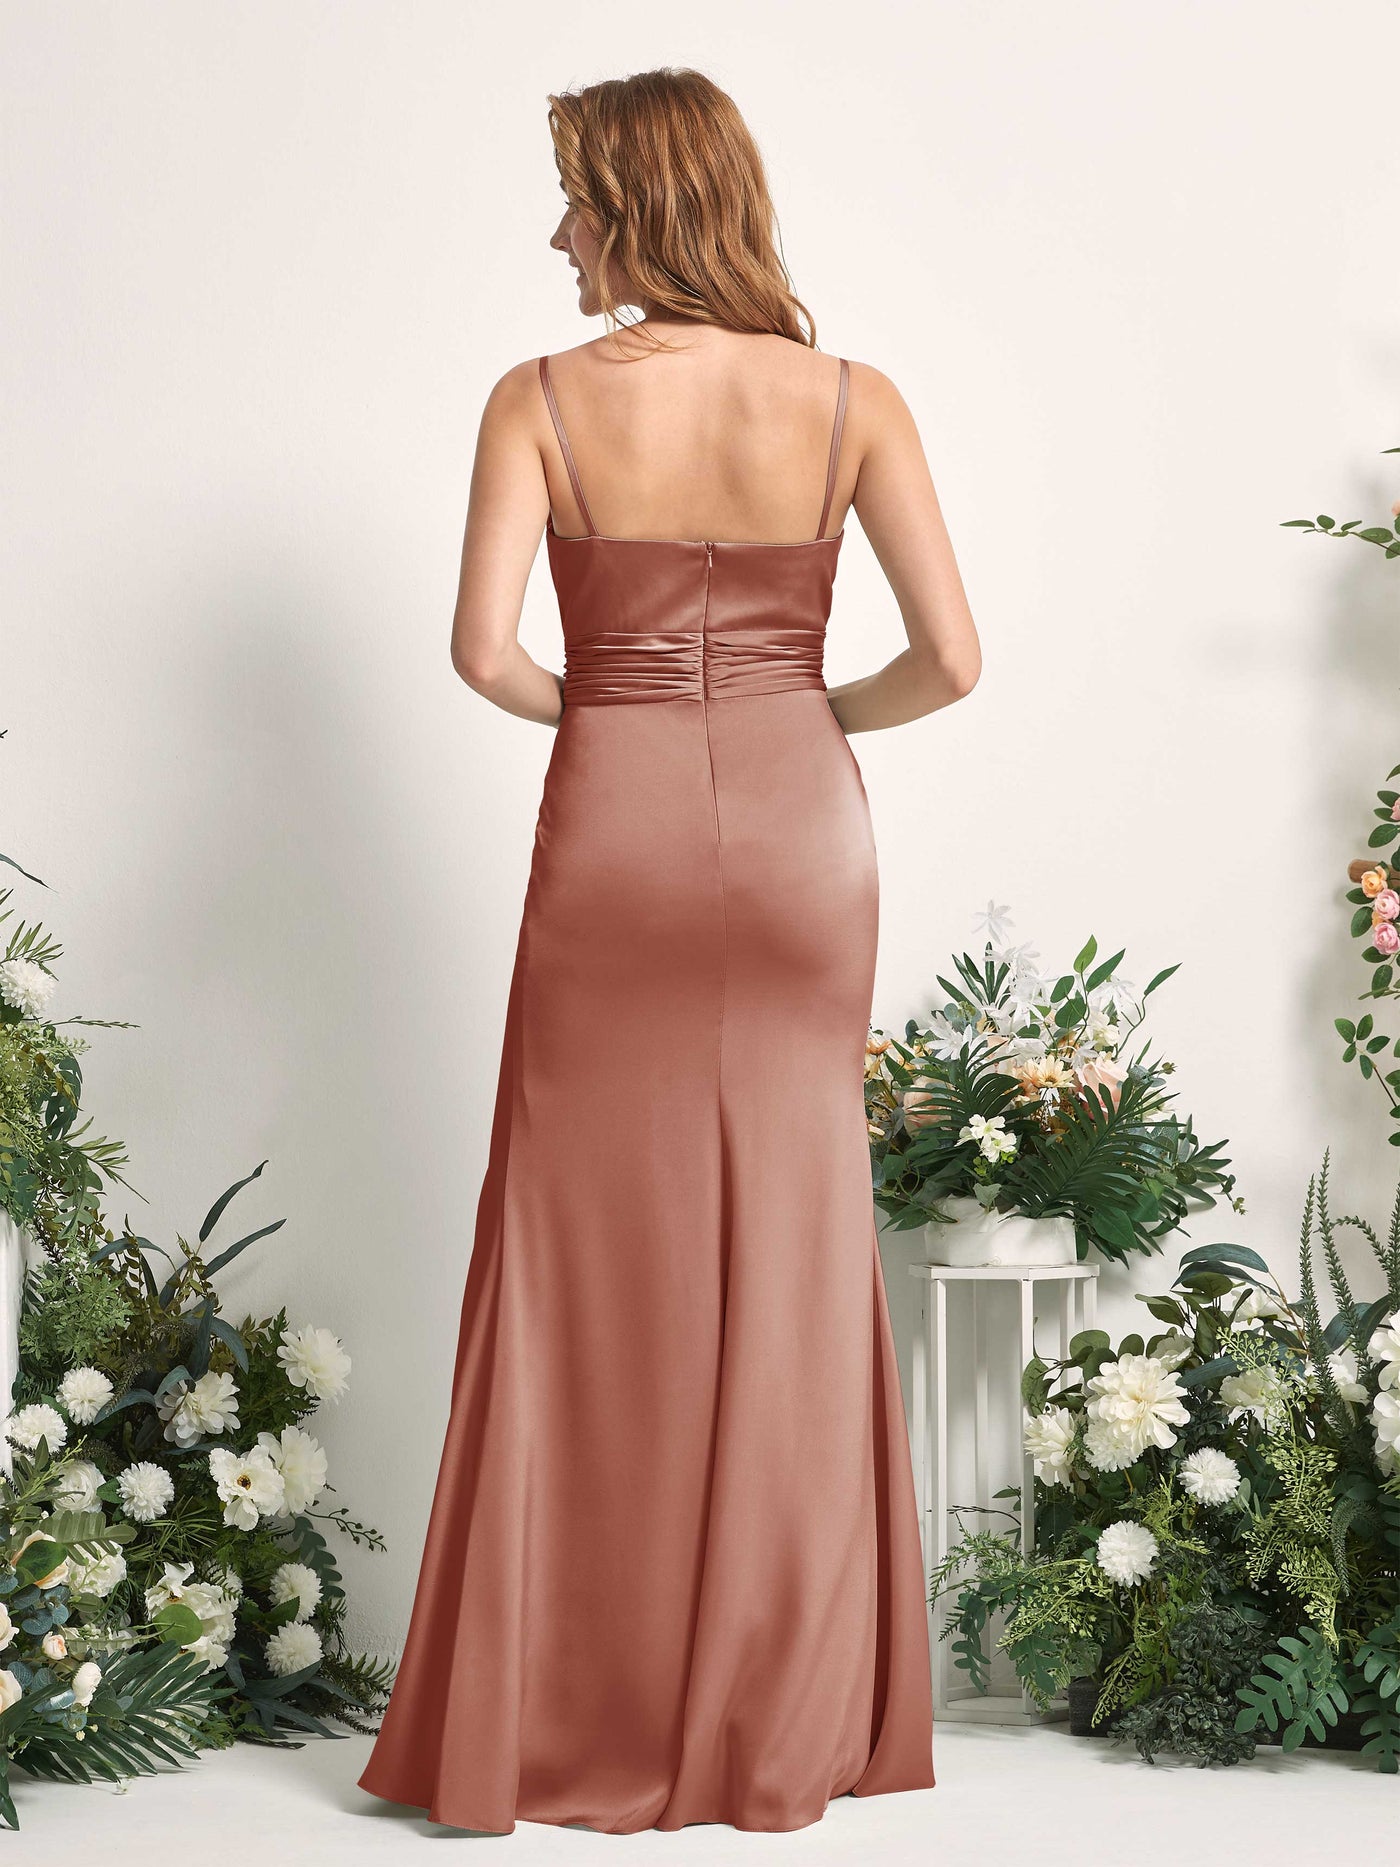 Raw Sienna Bridesmaid Dresses Bridesmaid Dress Mermaid/Trumpet Satin Spaghetti-straps Full Length Sleeveless Wedding Party Dress (80226315)#color_raw-sienna